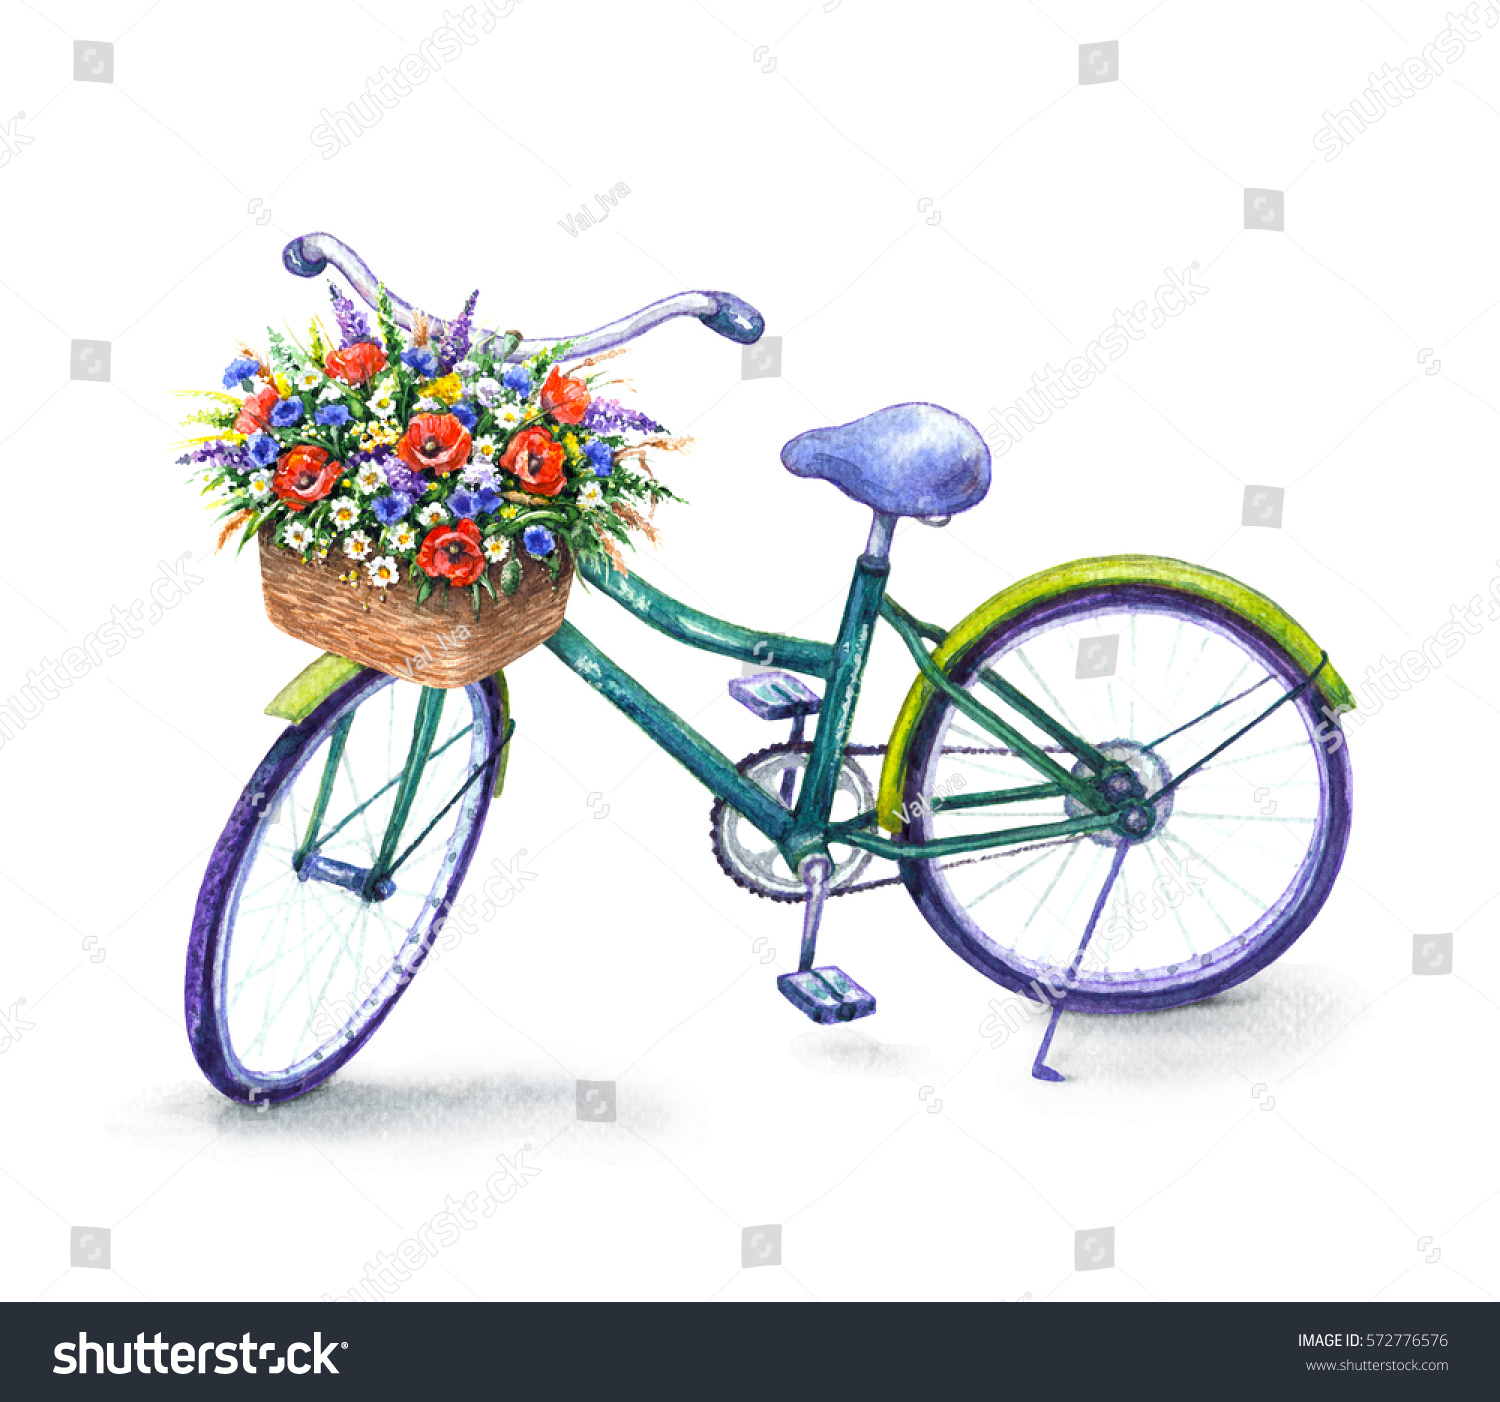 green bike with basket